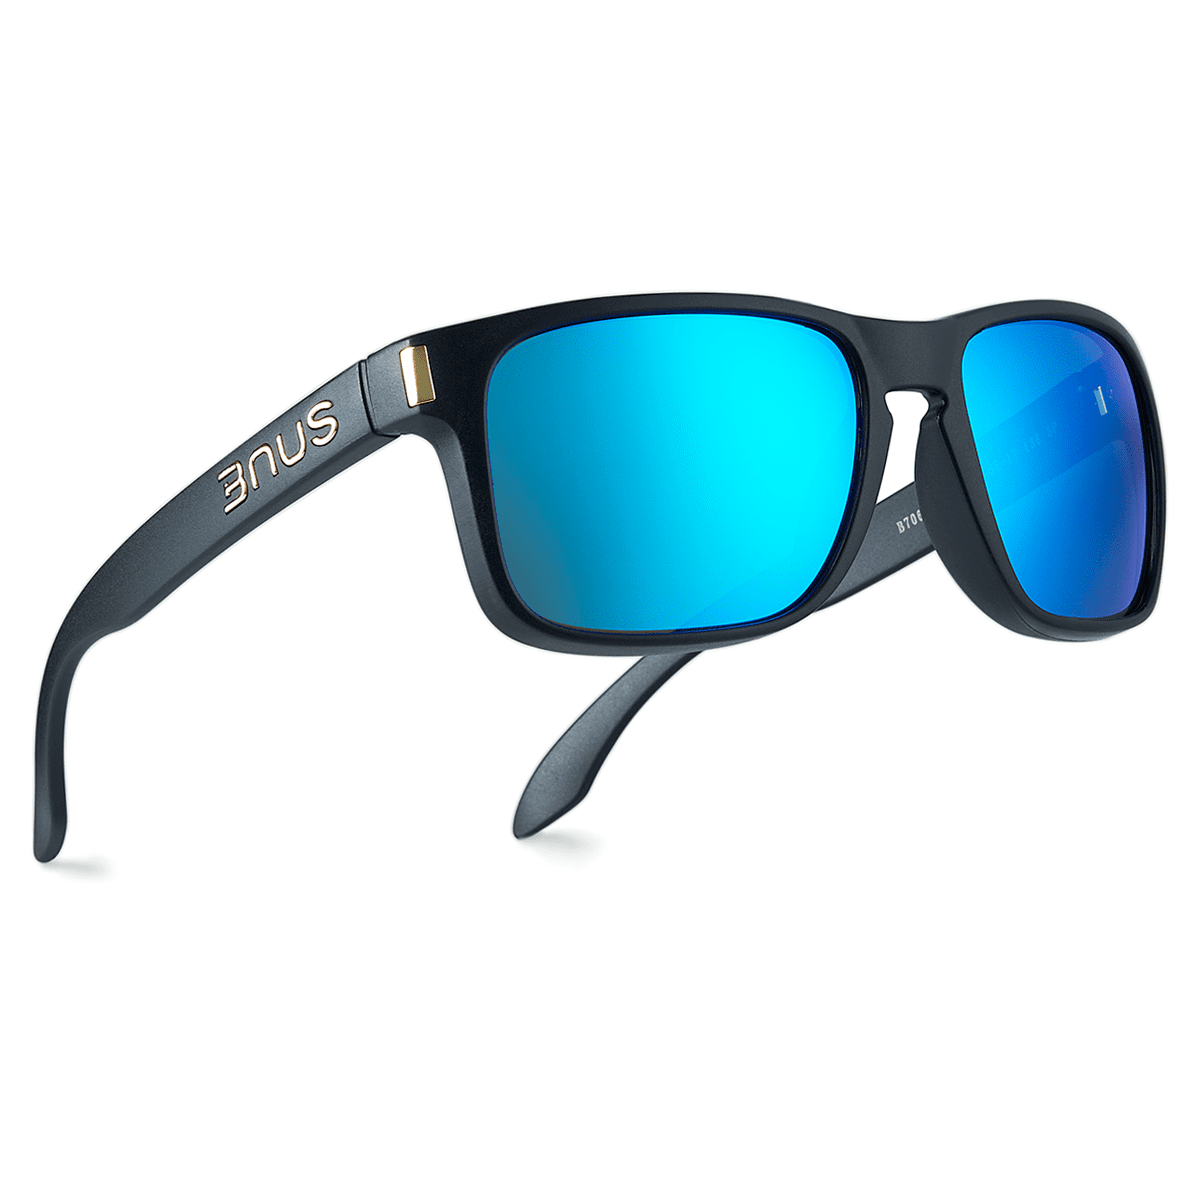 Bnus Corning Real Glass Lens Polarized Sunglasses For Men Women With Spring Hinges Matte Black